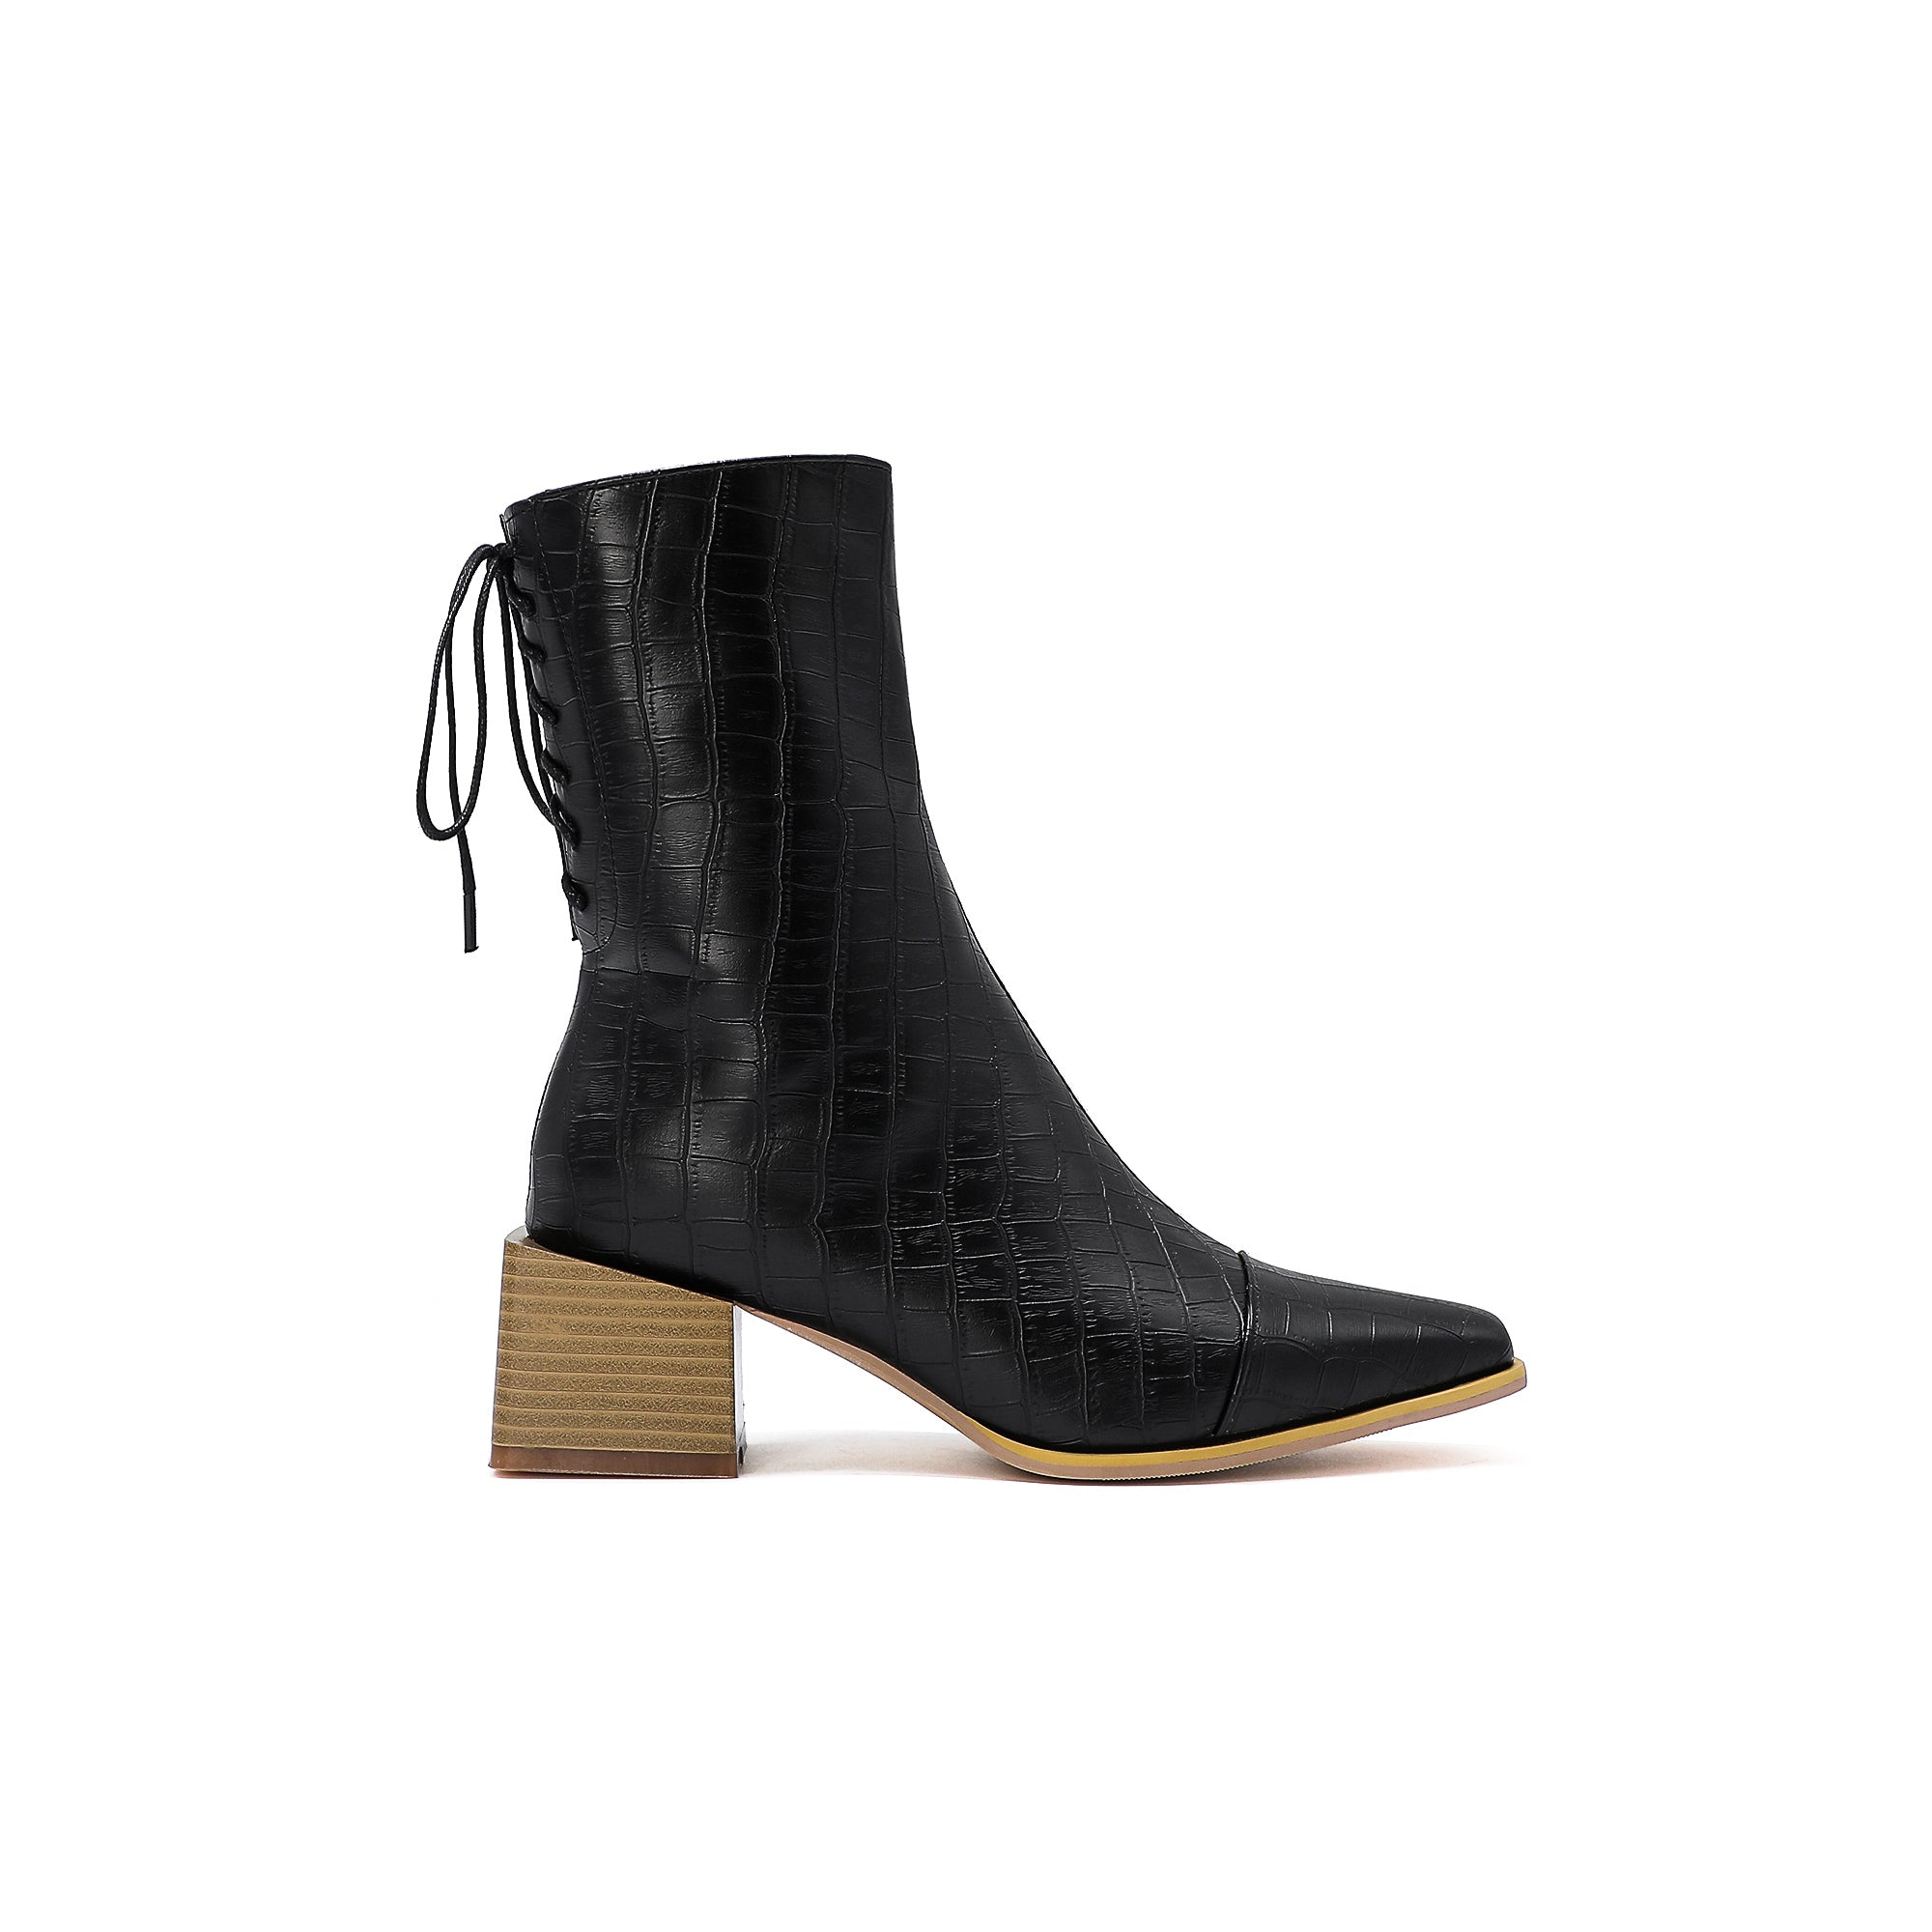 Bigsizeheels Western strap wooden heel - Black freeshipping - bigsizeheel®-size5-size15 -All Plus Sizes Available!